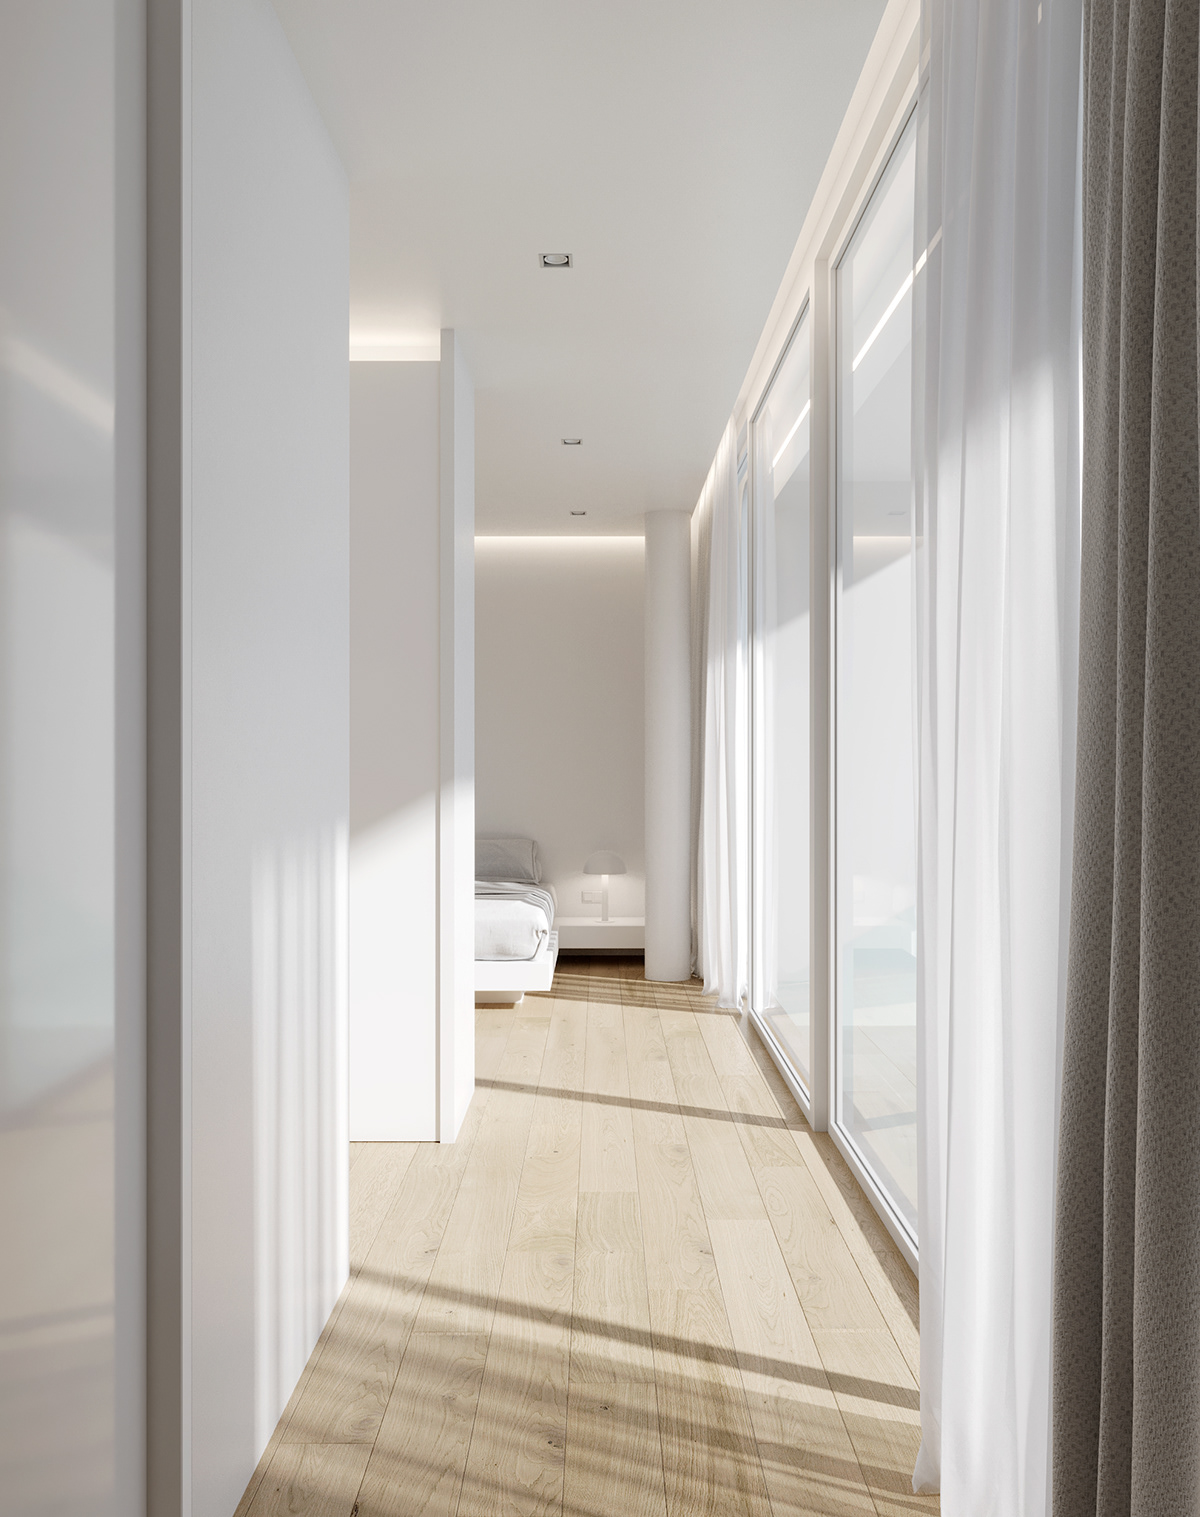 CGI Render corona coronarenderer bedroom design minimalist minimal interiordesign